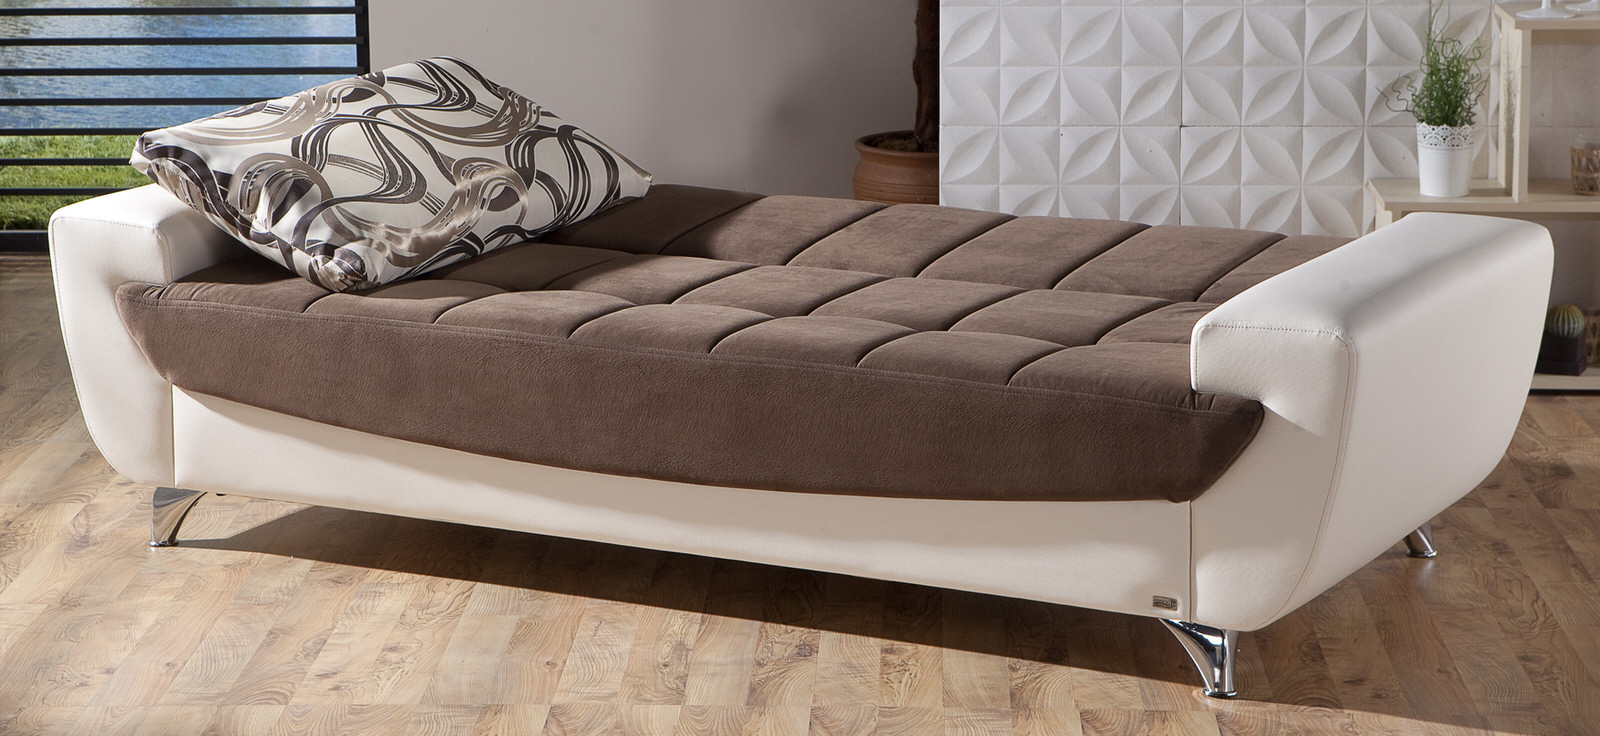 high quality sofa beds uk